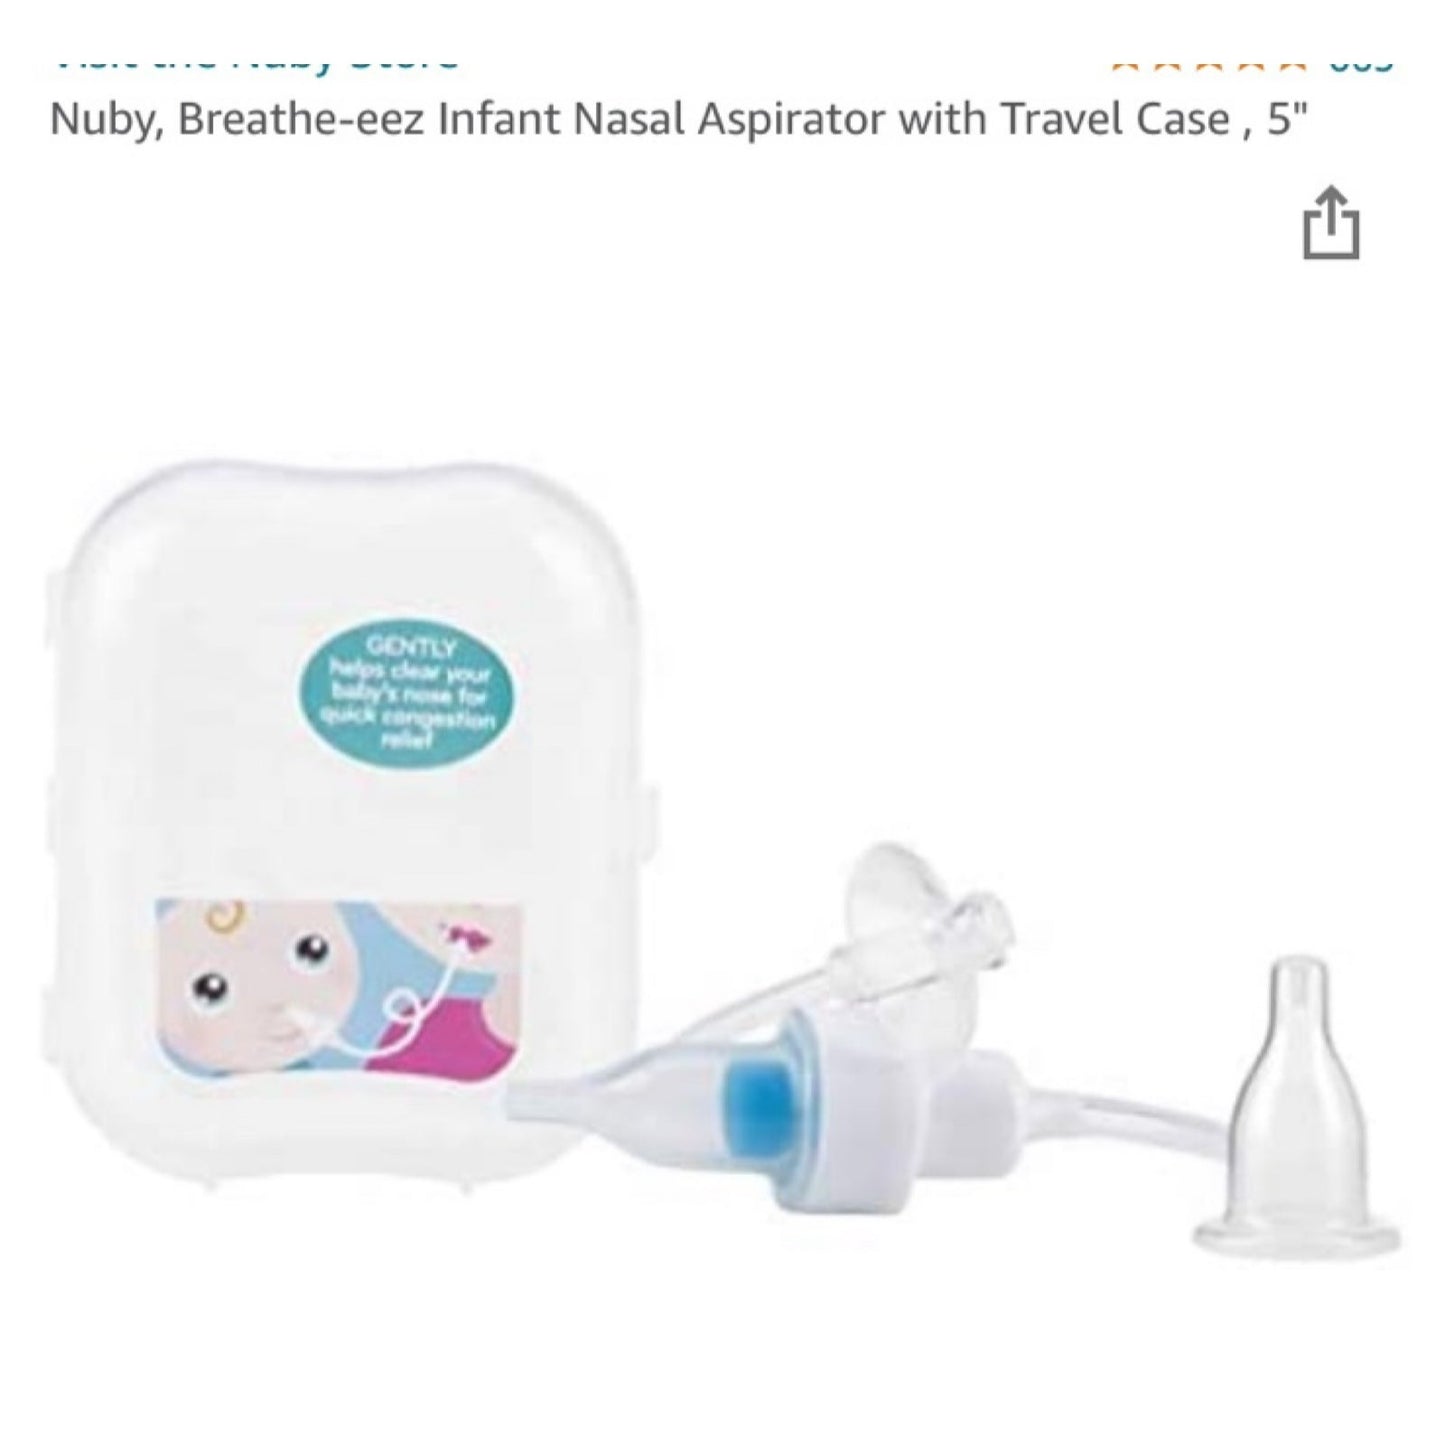 New Nuby, Breathe-eez Infant Nasal Aspirator with Travel Case , 5"